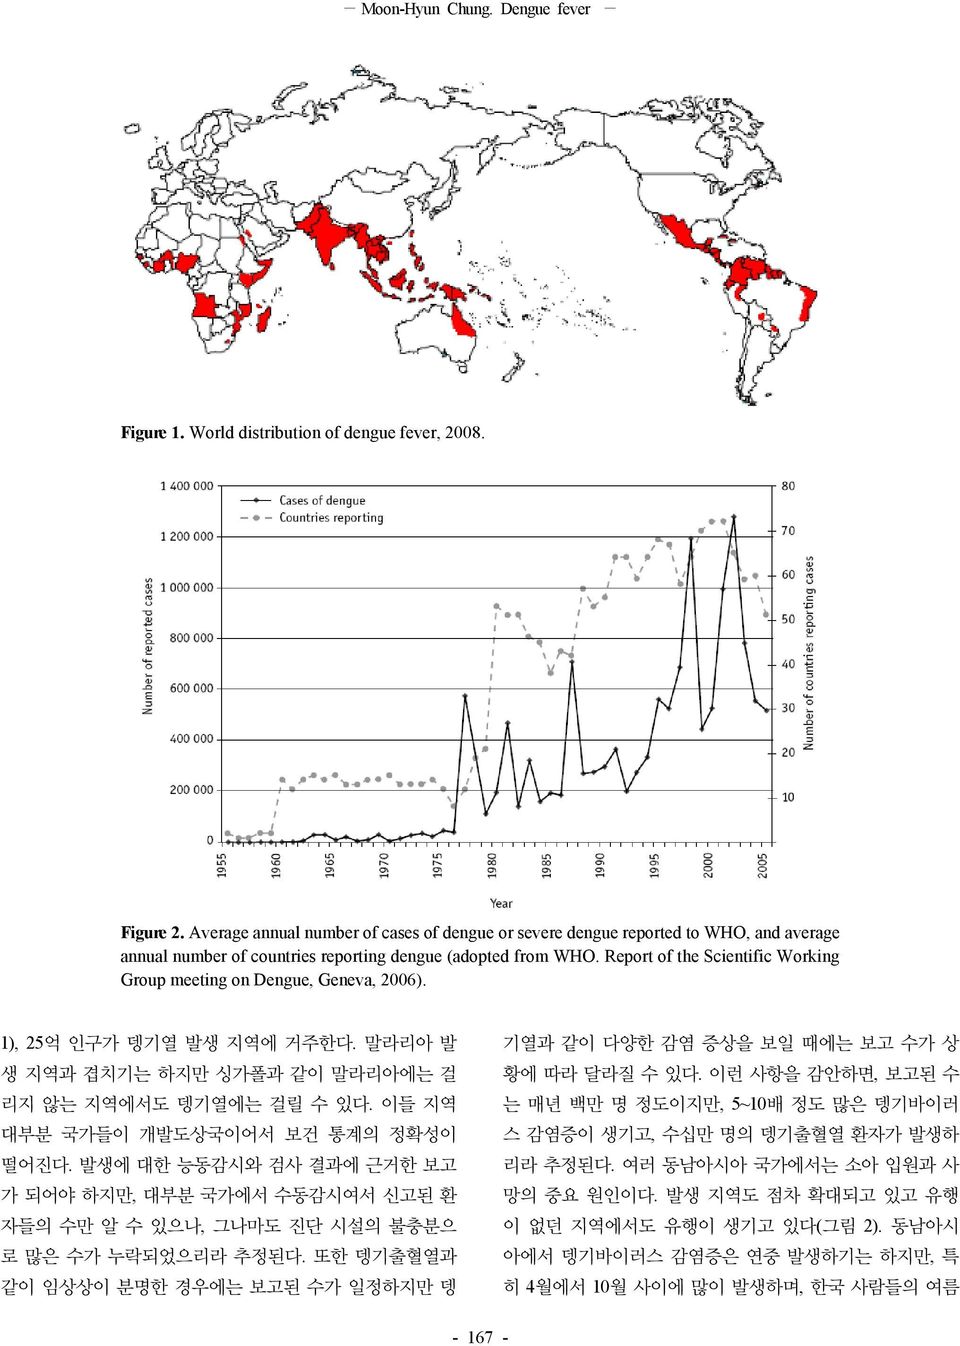 Report of the Scientific Working Group meeting on Dengue, Geneva, 2006). 1), 25억 인구가 뎅기열 발생 지역에 거주한다. 말라리아 발 생 지역과 겹치기는 하지만 싱가폴과 같이 말라리아에는 걸 리지 않는 지역에서도 뎅기열에는 걸릴 수 있다.